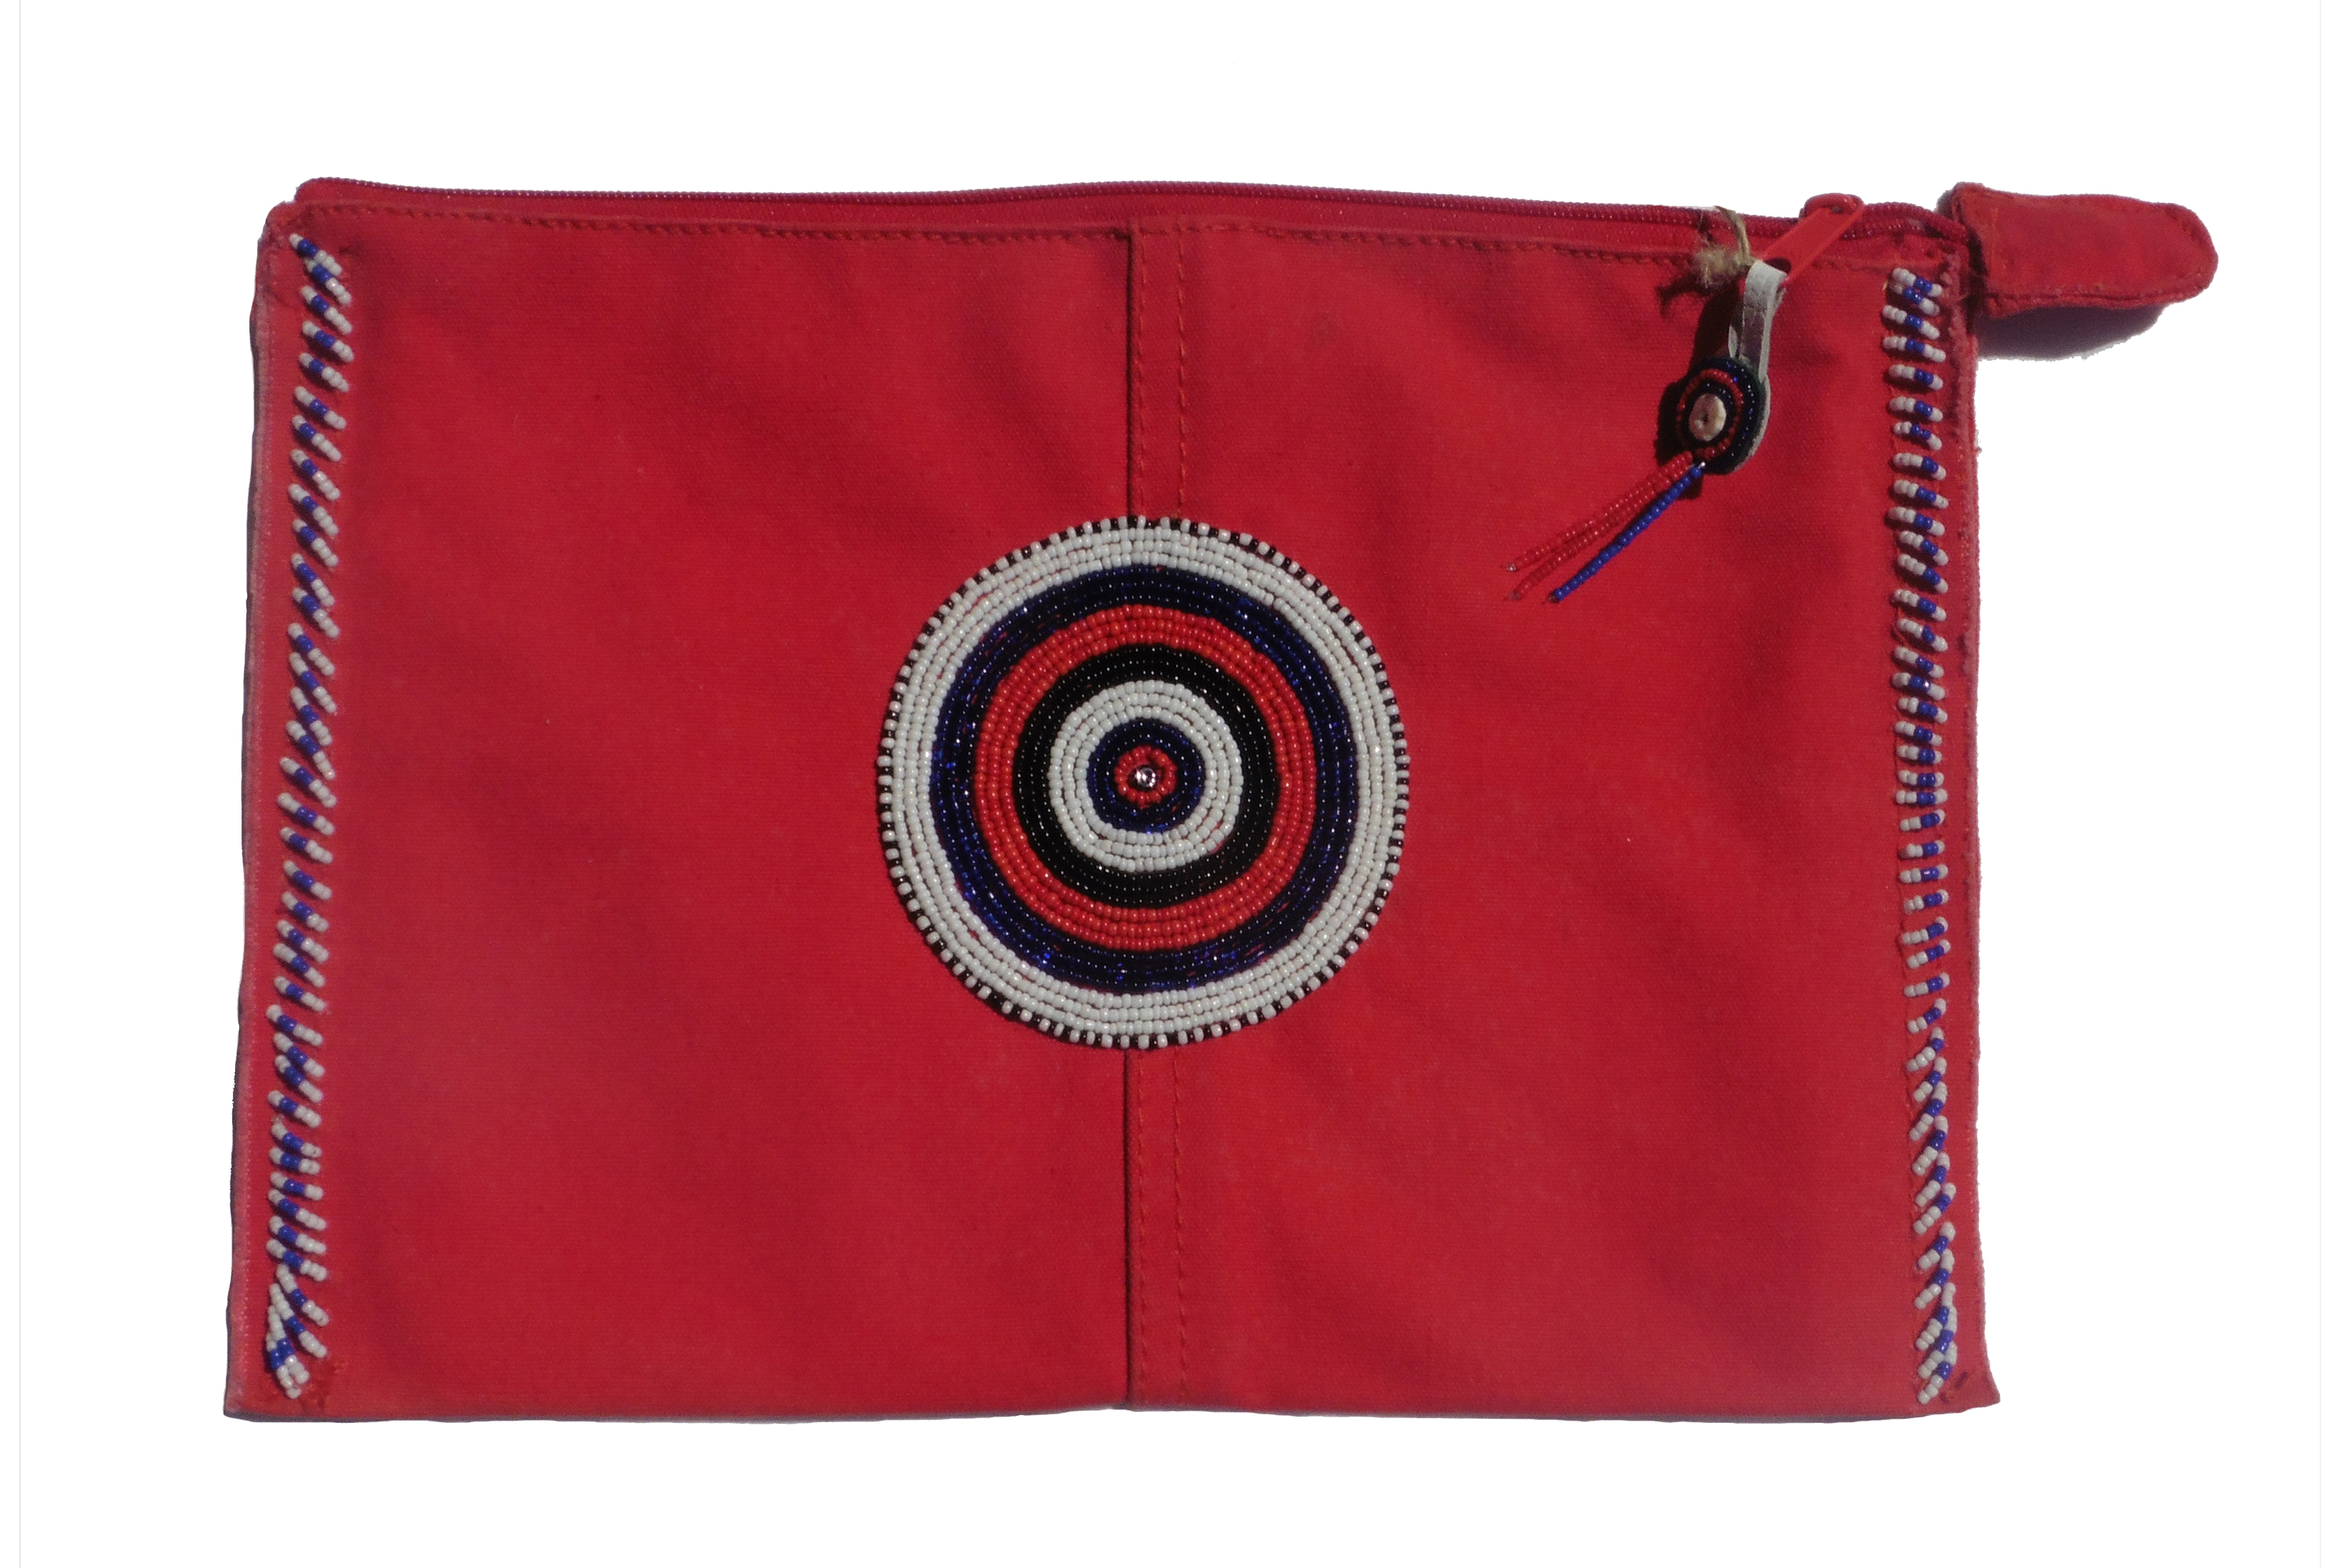 Ipad Canvas bag - red-01